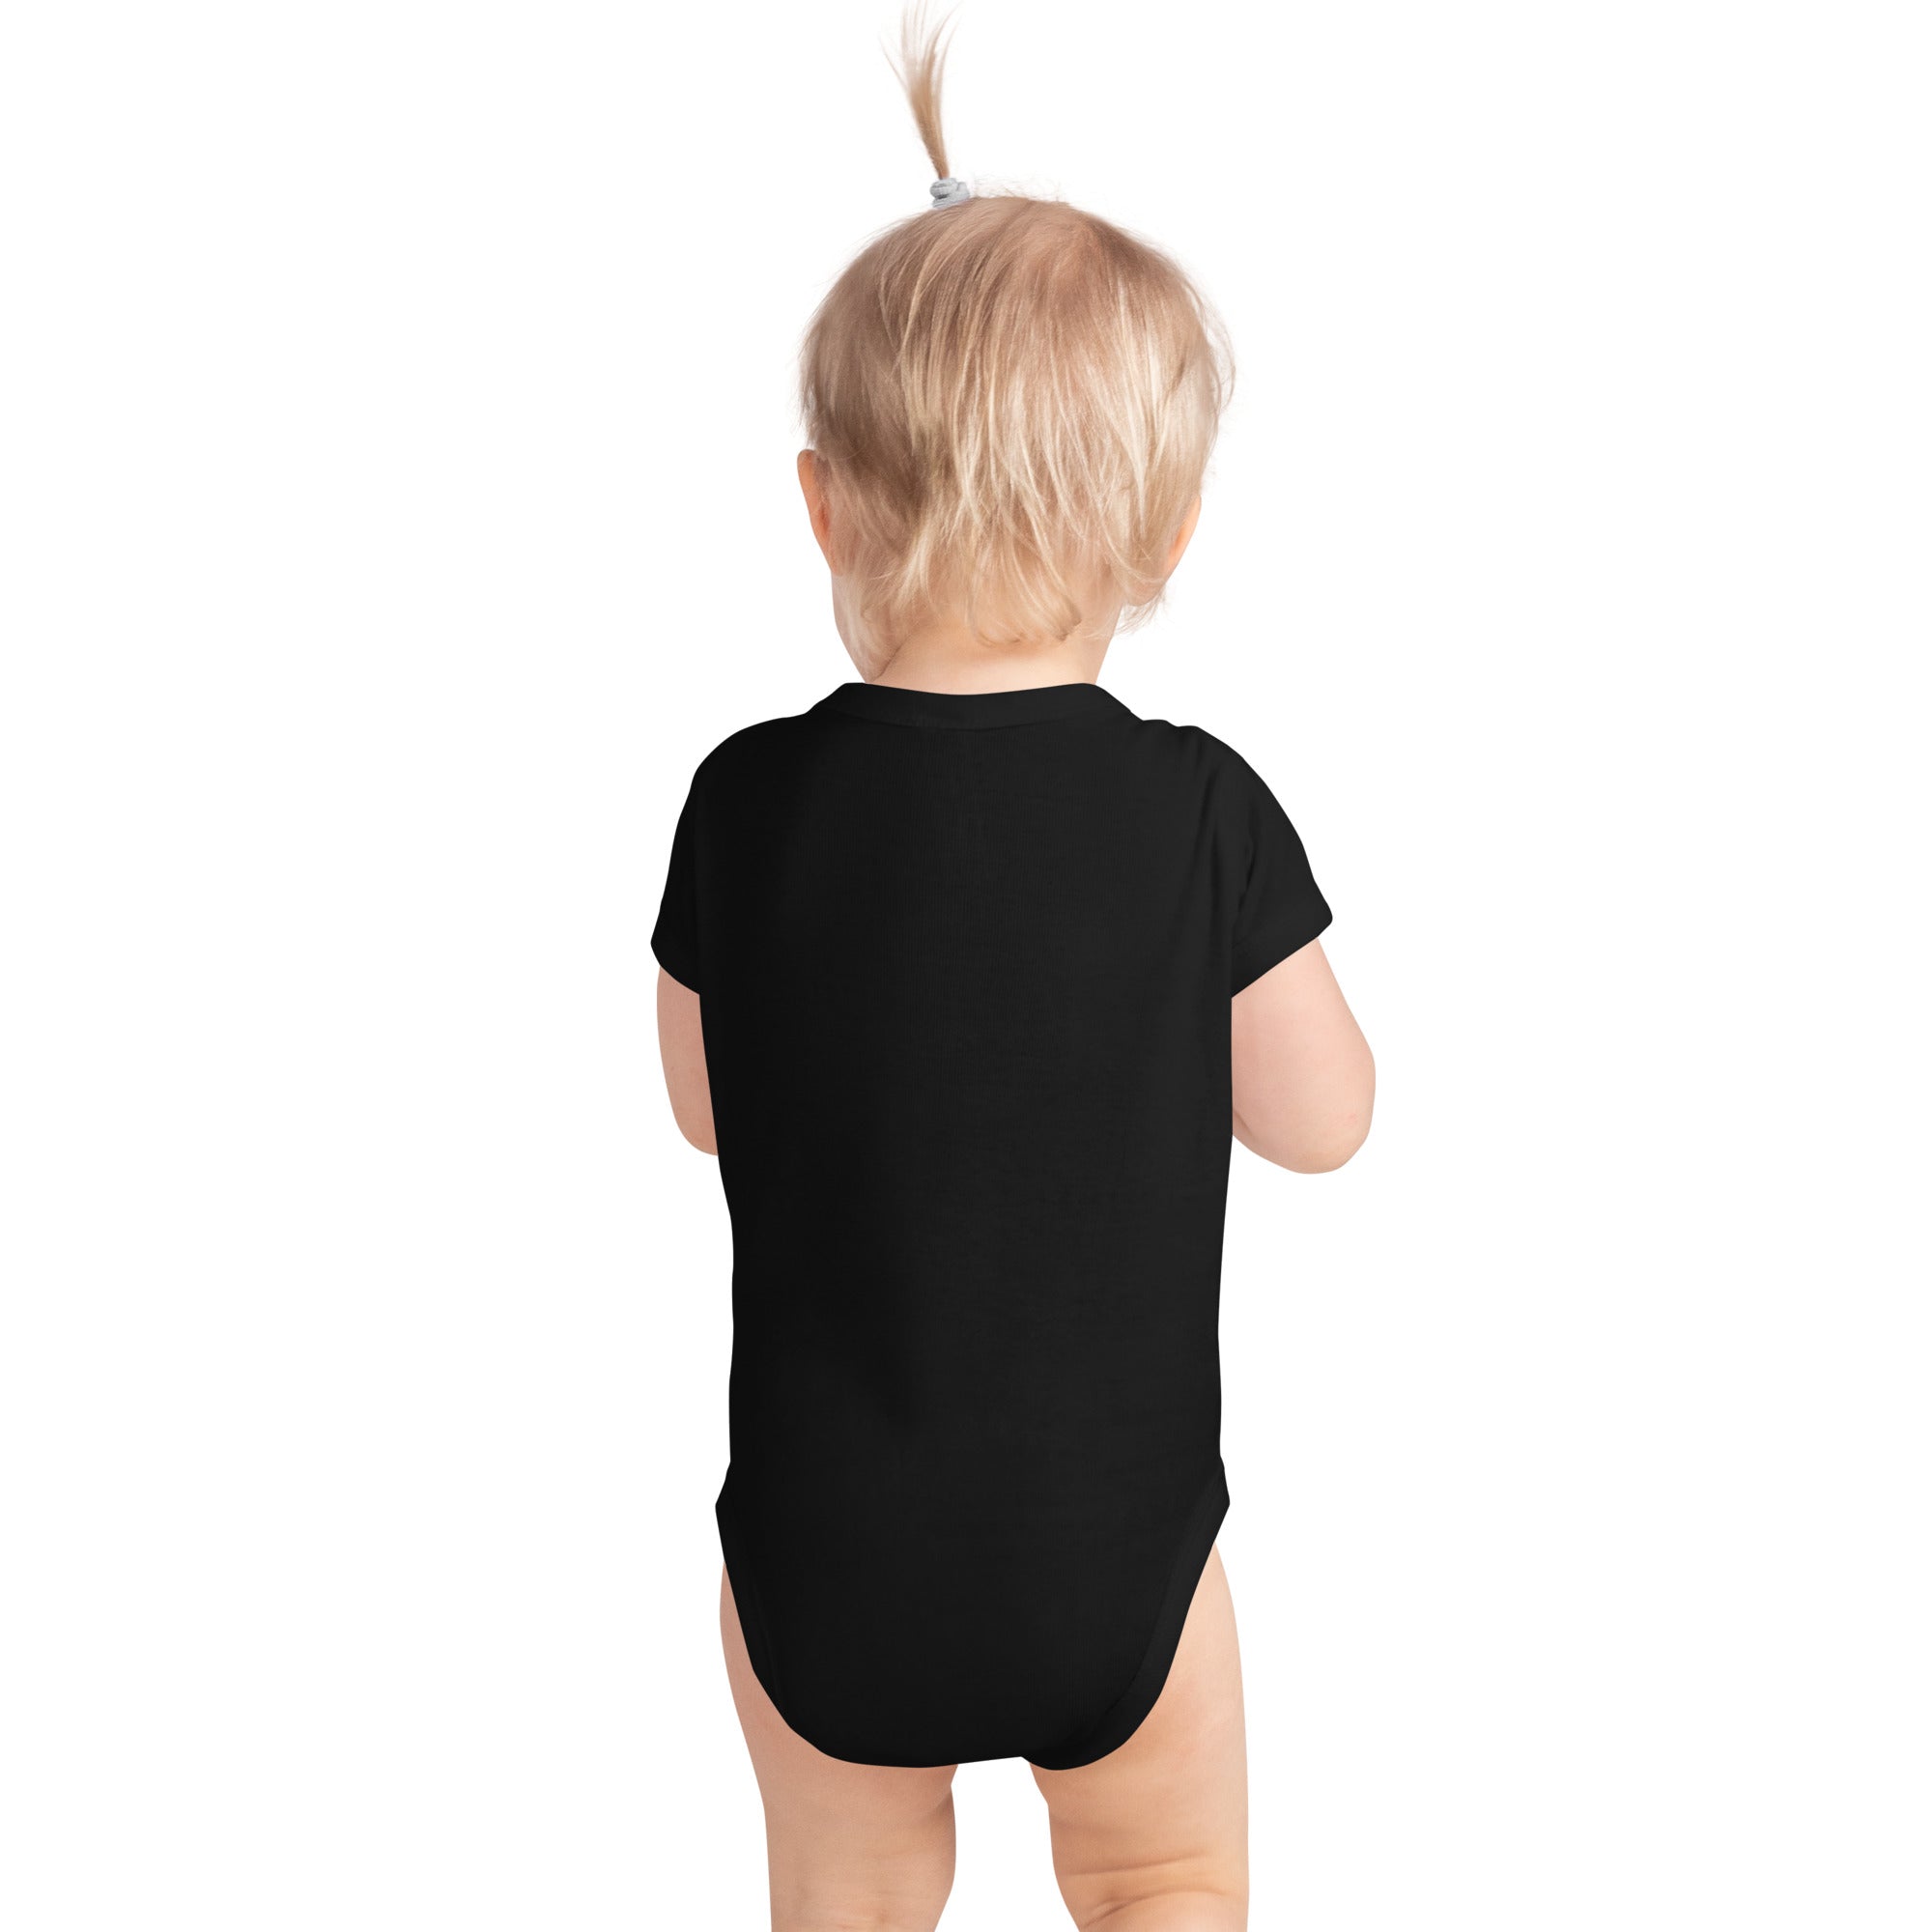 Rad Newborn Short Sleeve Bodysuit